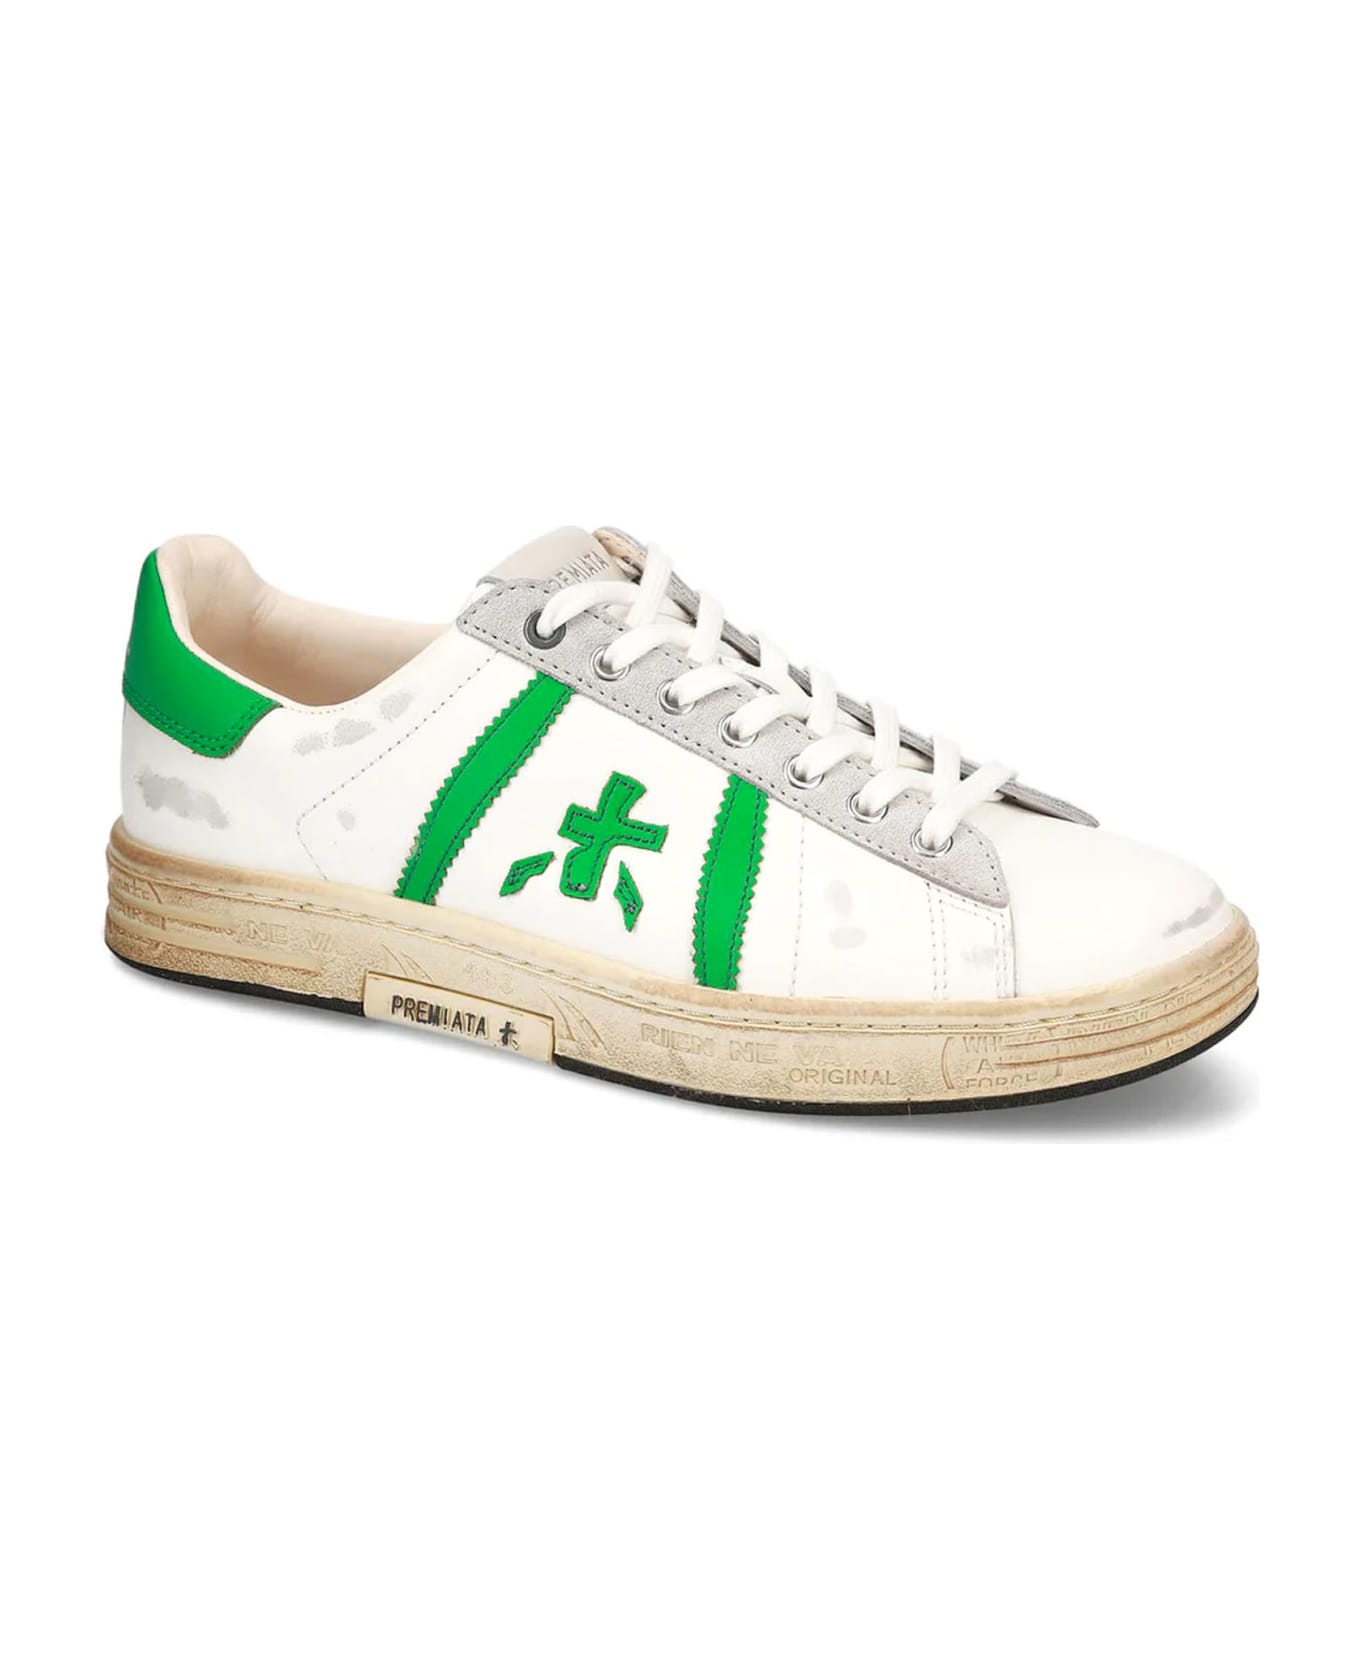 Premiata Russell Sneakers - White